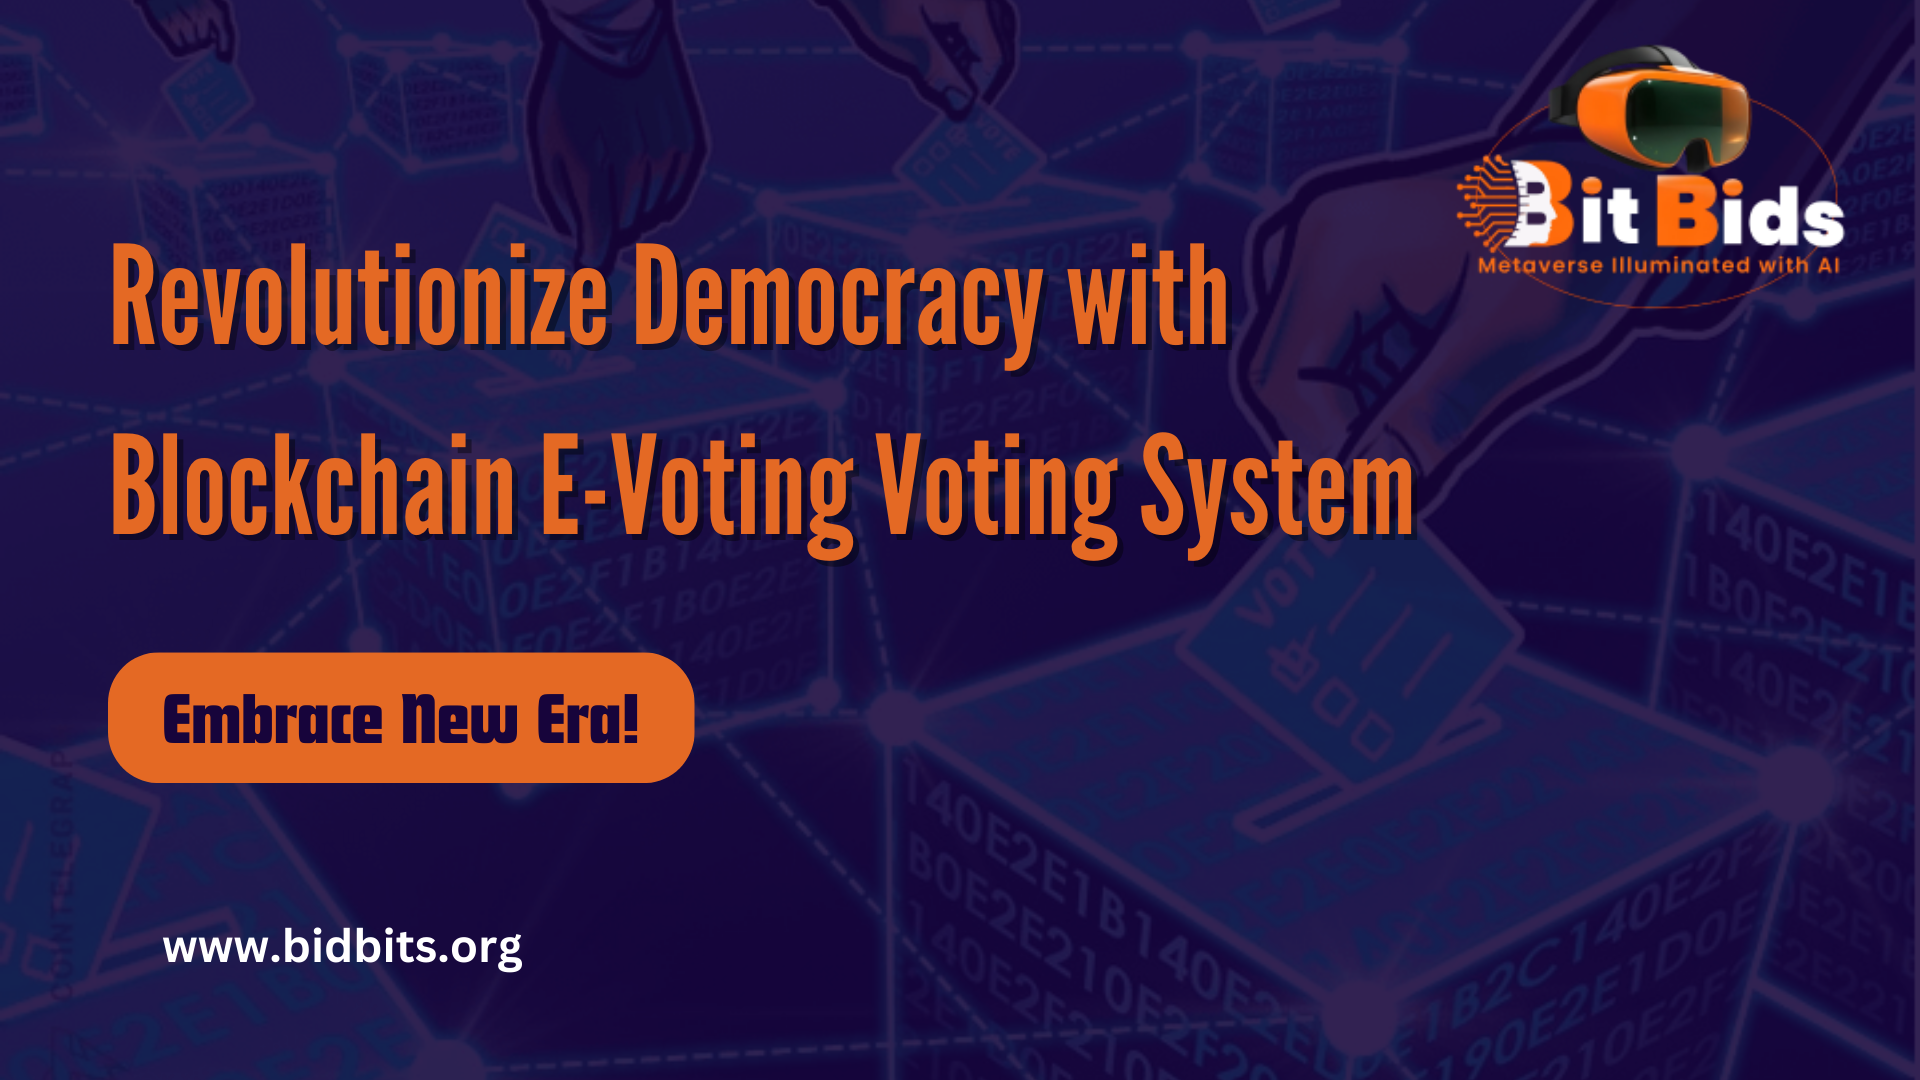 Blockchain Digital Voting System